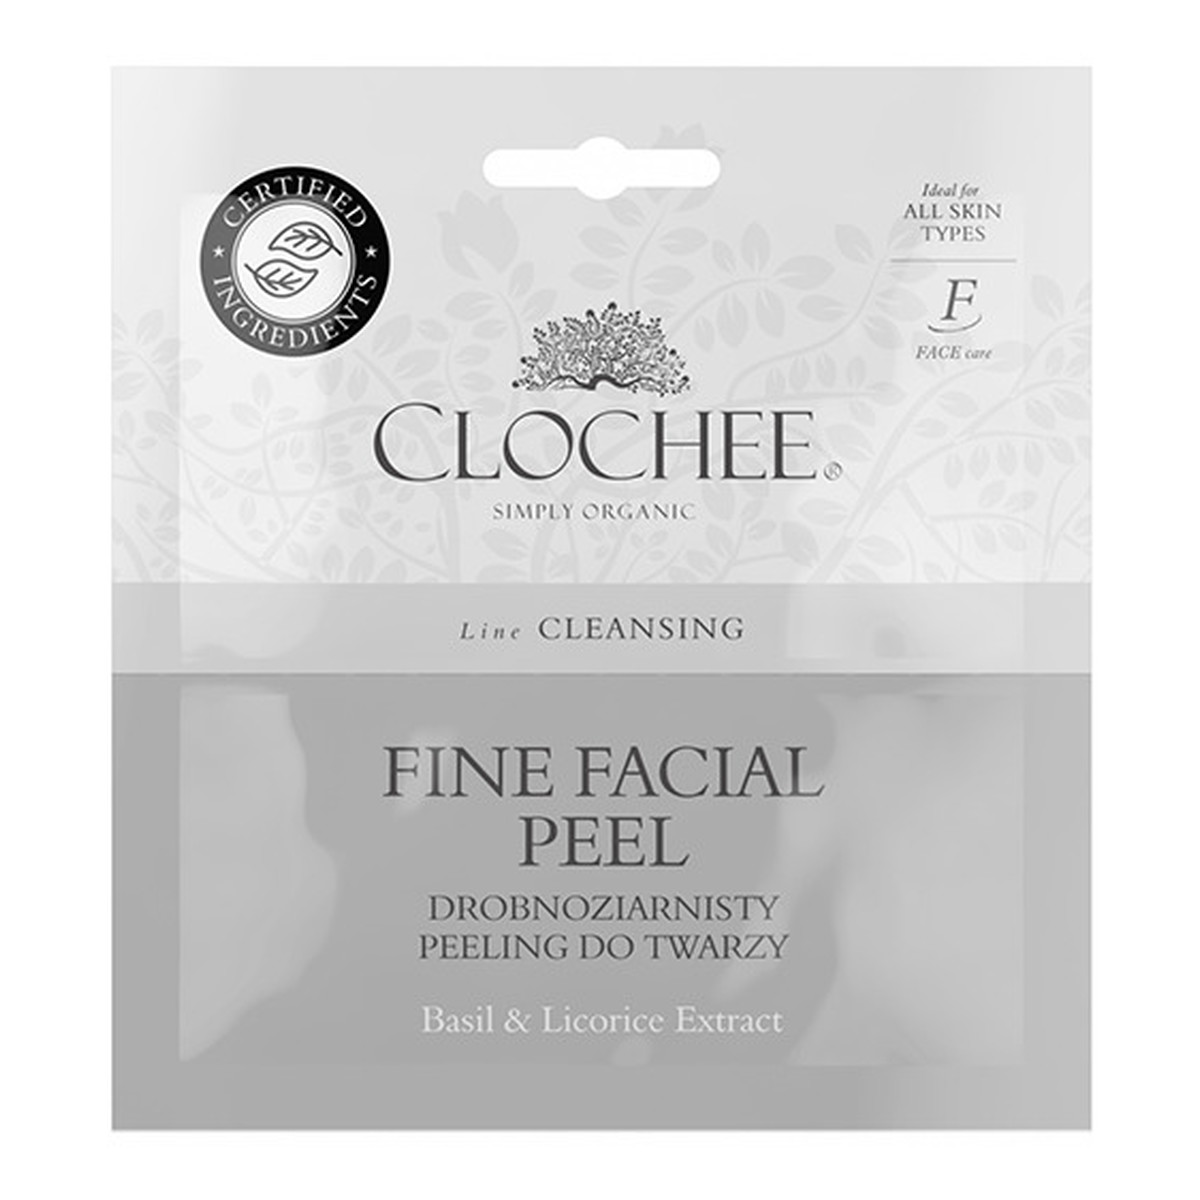 Clochee Fine Facial Peel Drobnoziarnisty peeling do twarzy Basil & Licorice Extract 2x6ml 12ml